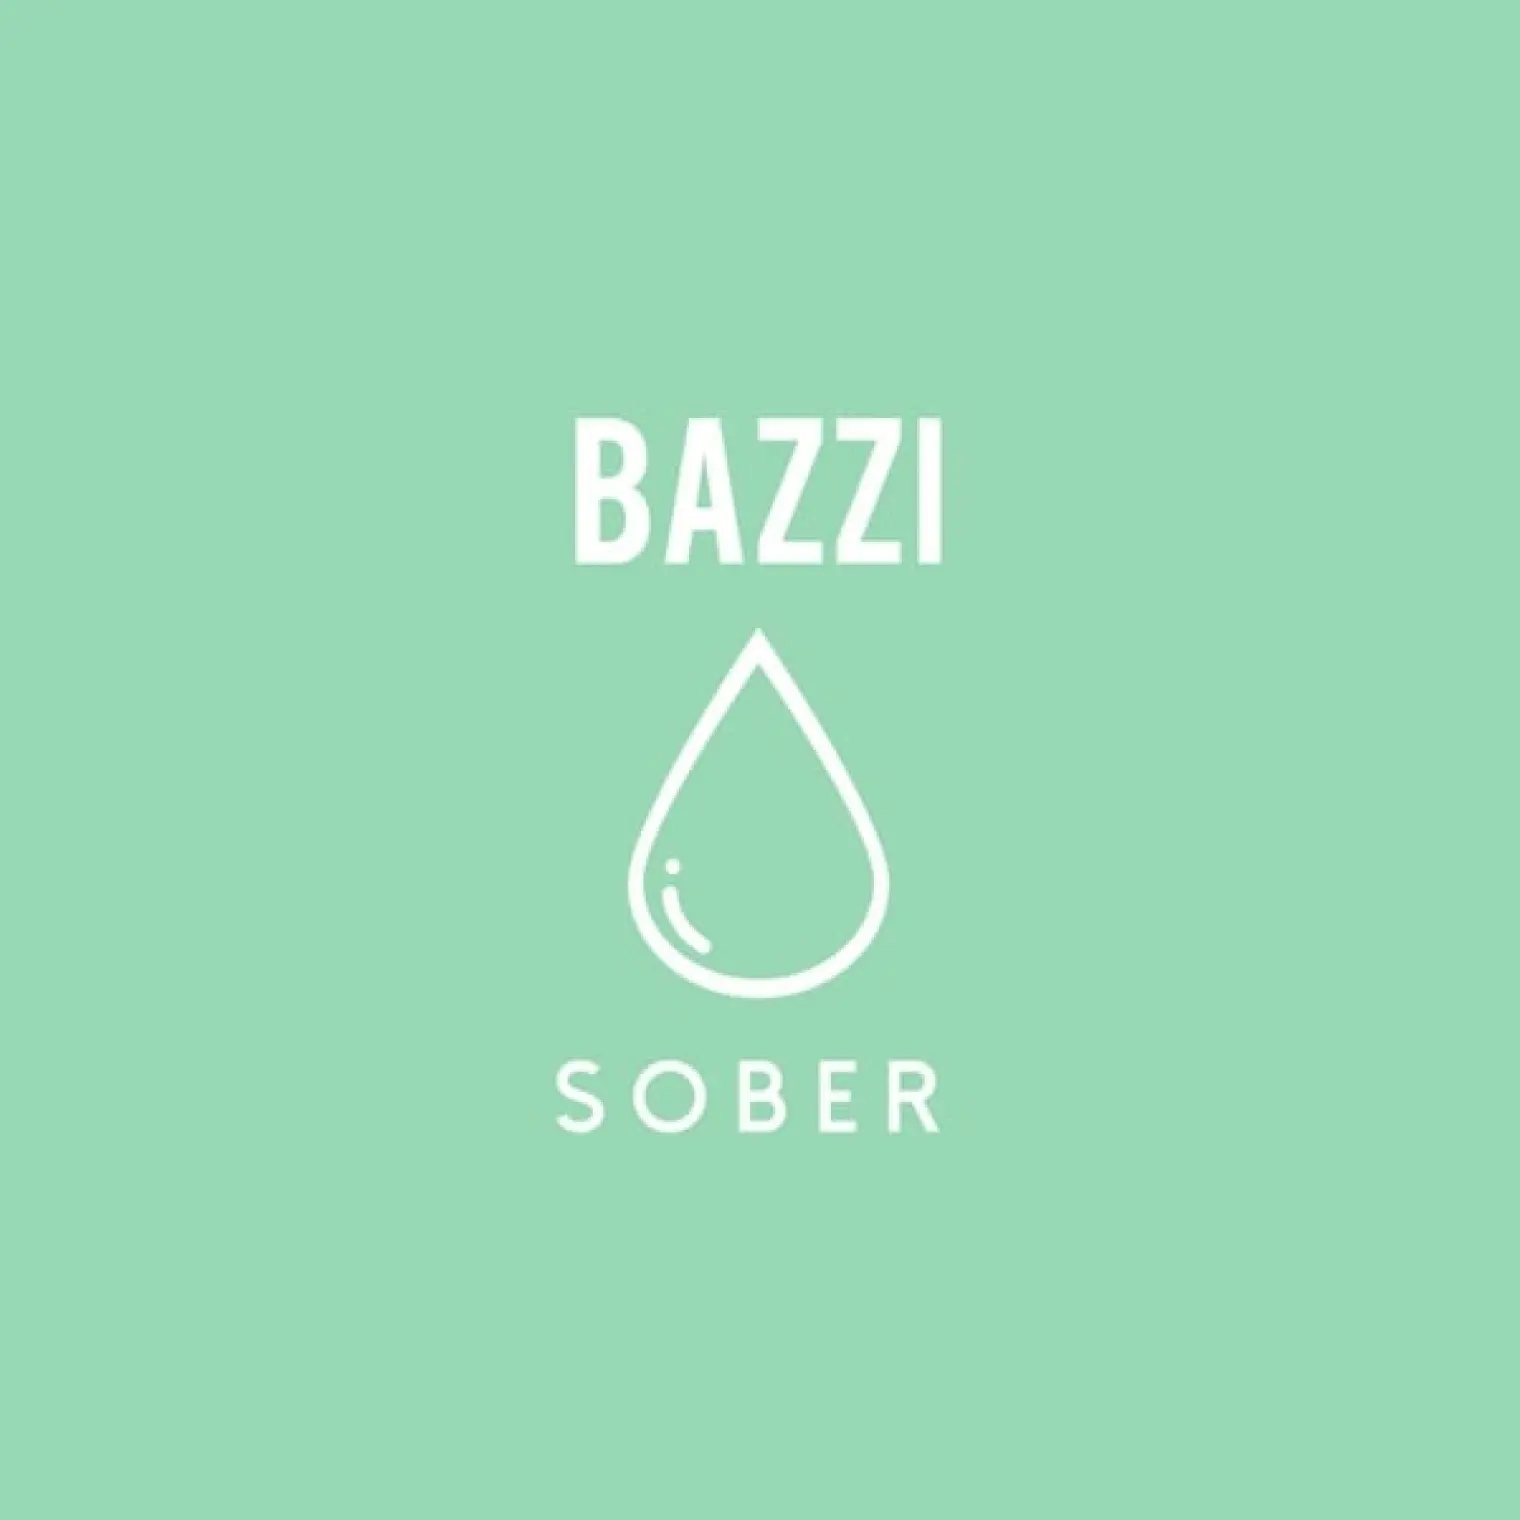 Sober -  Bazzi 